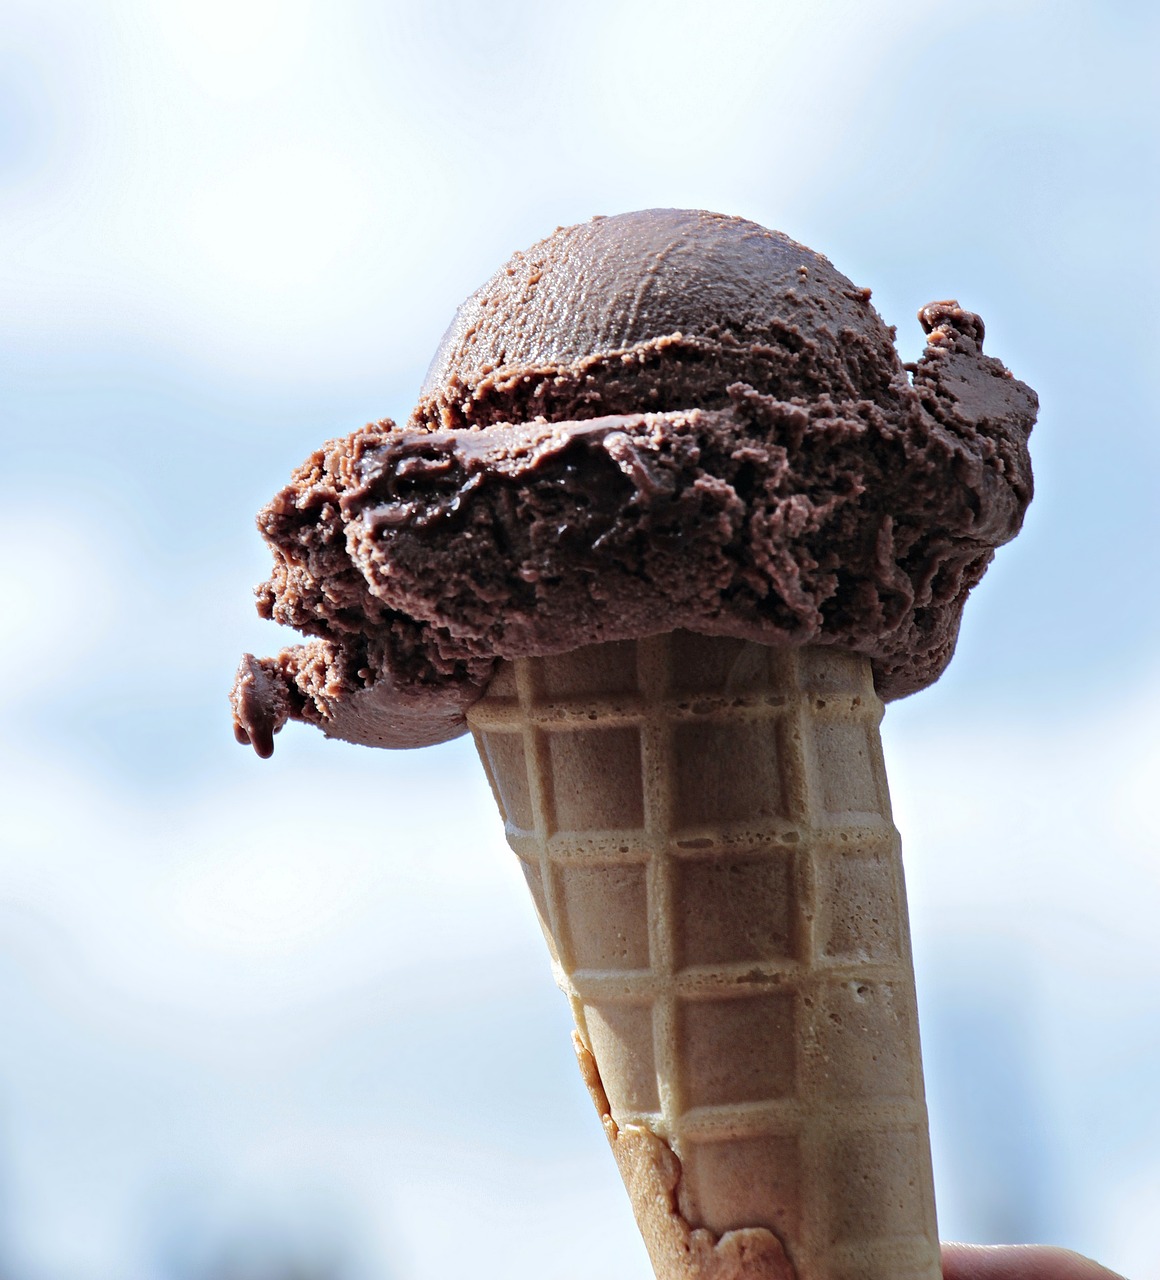 ice cream, chocolate ice cream, heaven-3762671.jpg